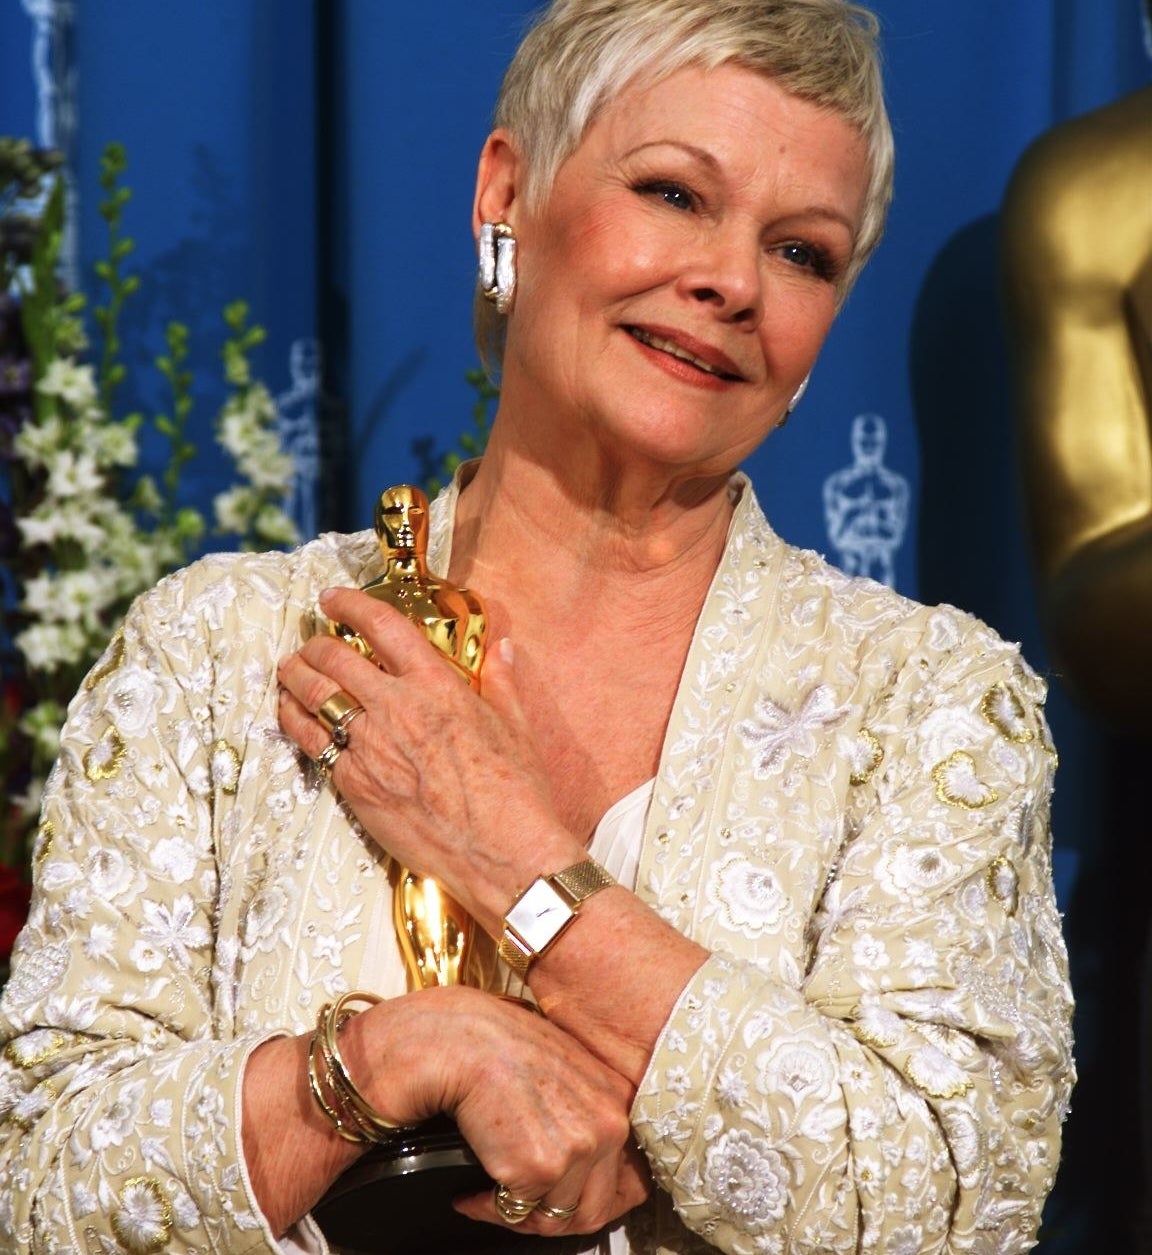 Judi Dench cradling her Oscar